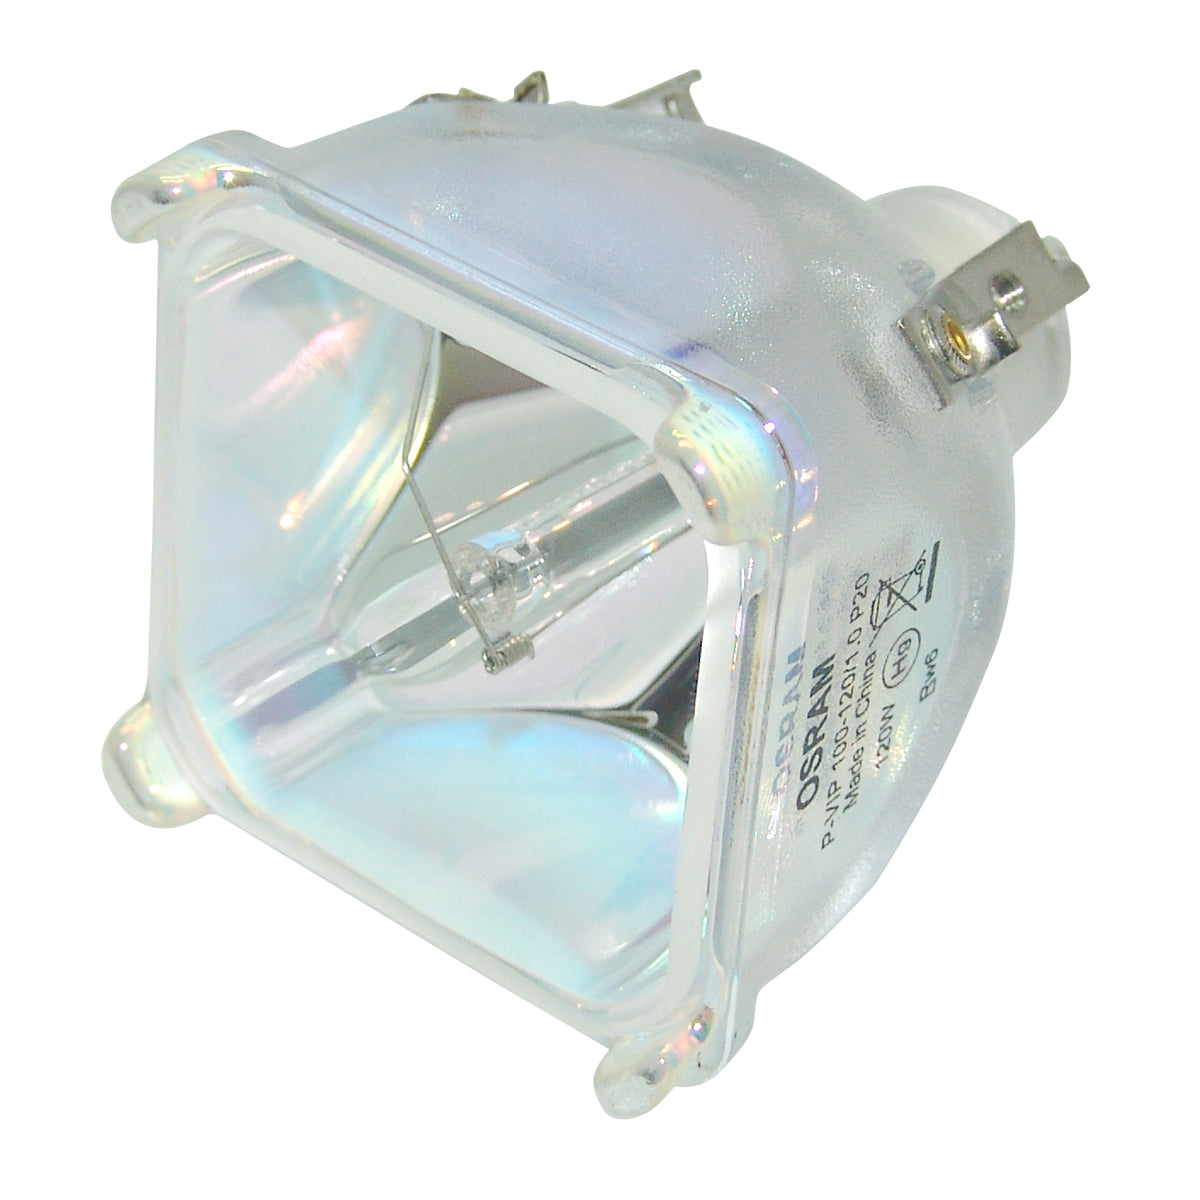 Viewsonic RLU-150-001 Osram Projector Bare Lamp